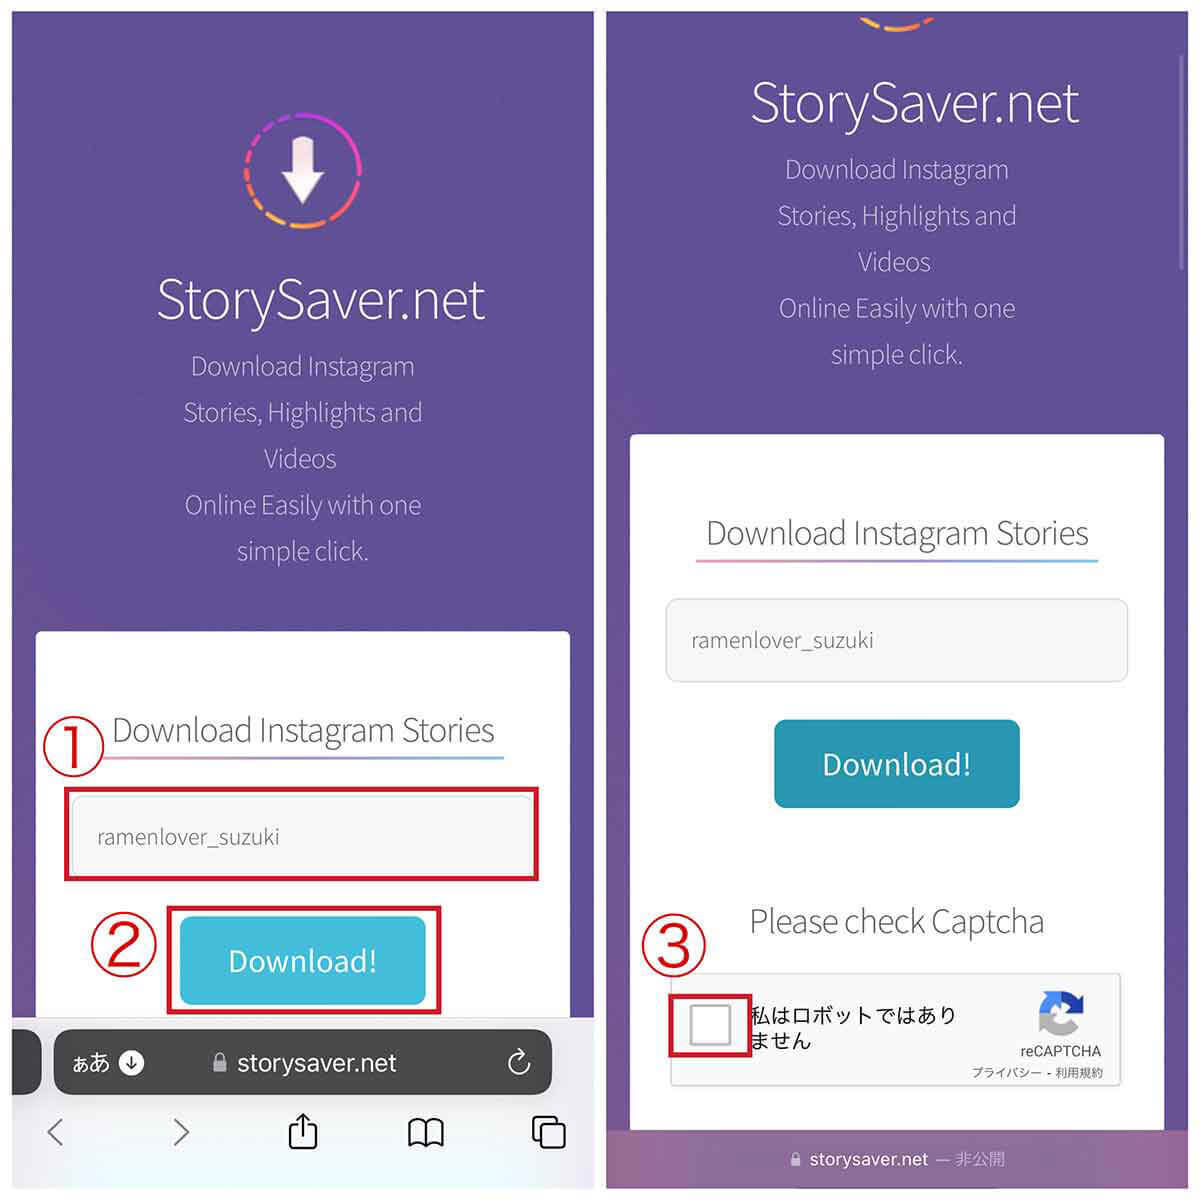 StorySaver.net | 「私はロボットではありません」へチェックが必要1